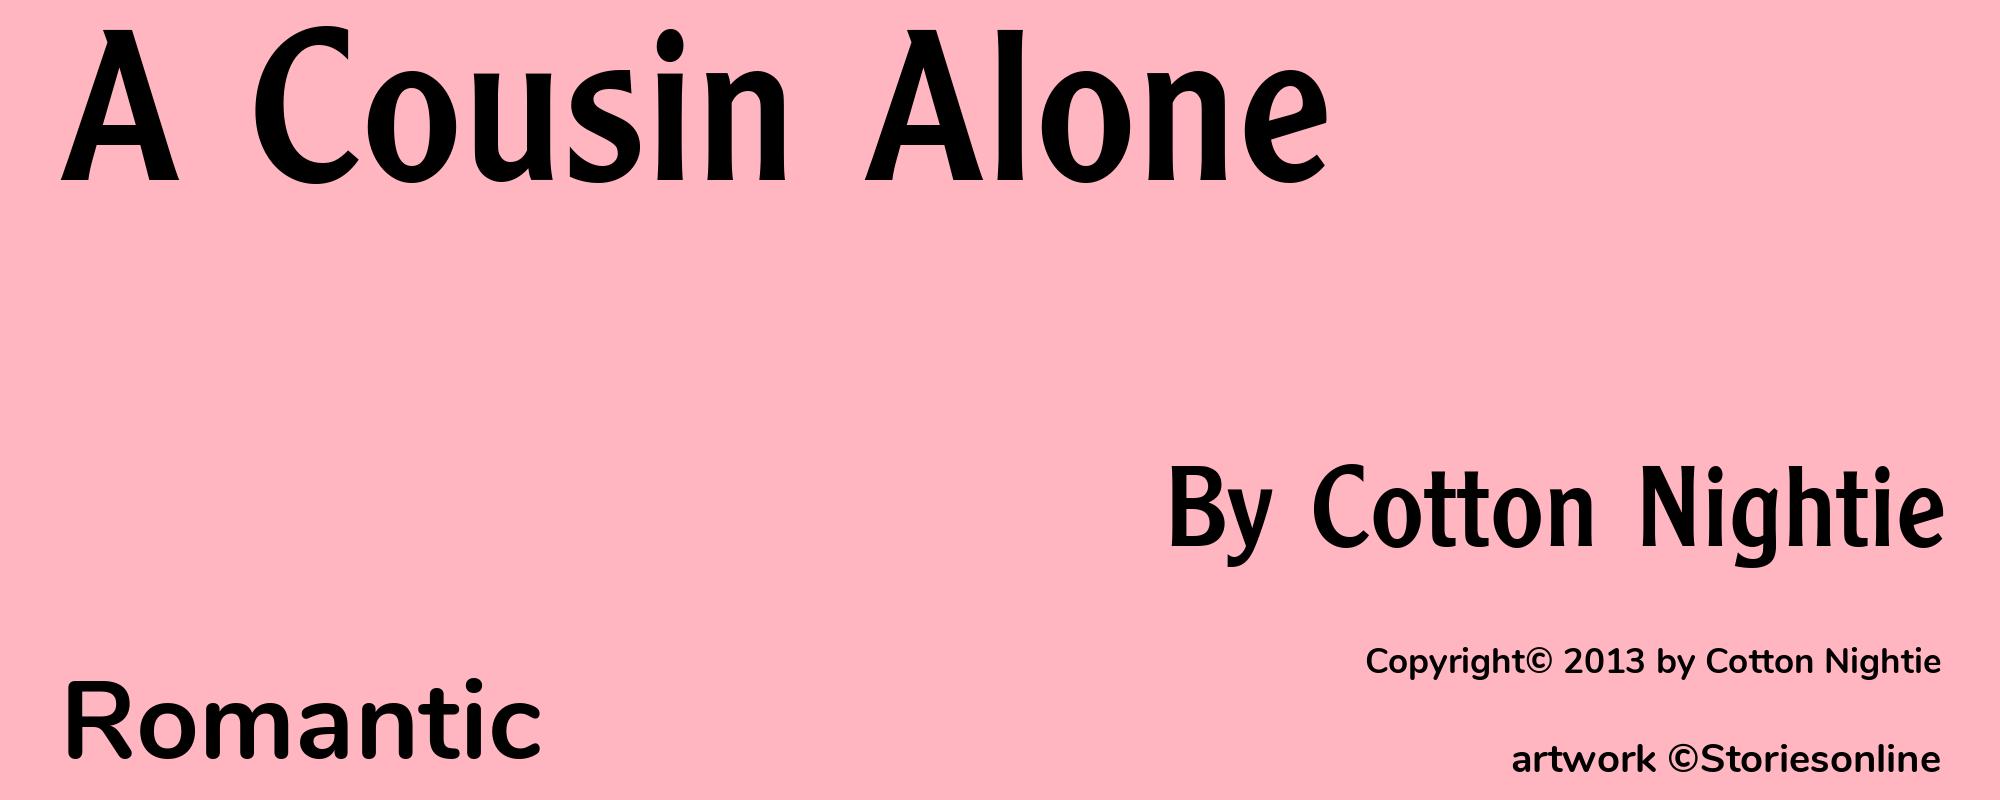 A Cousin Alone - Cover